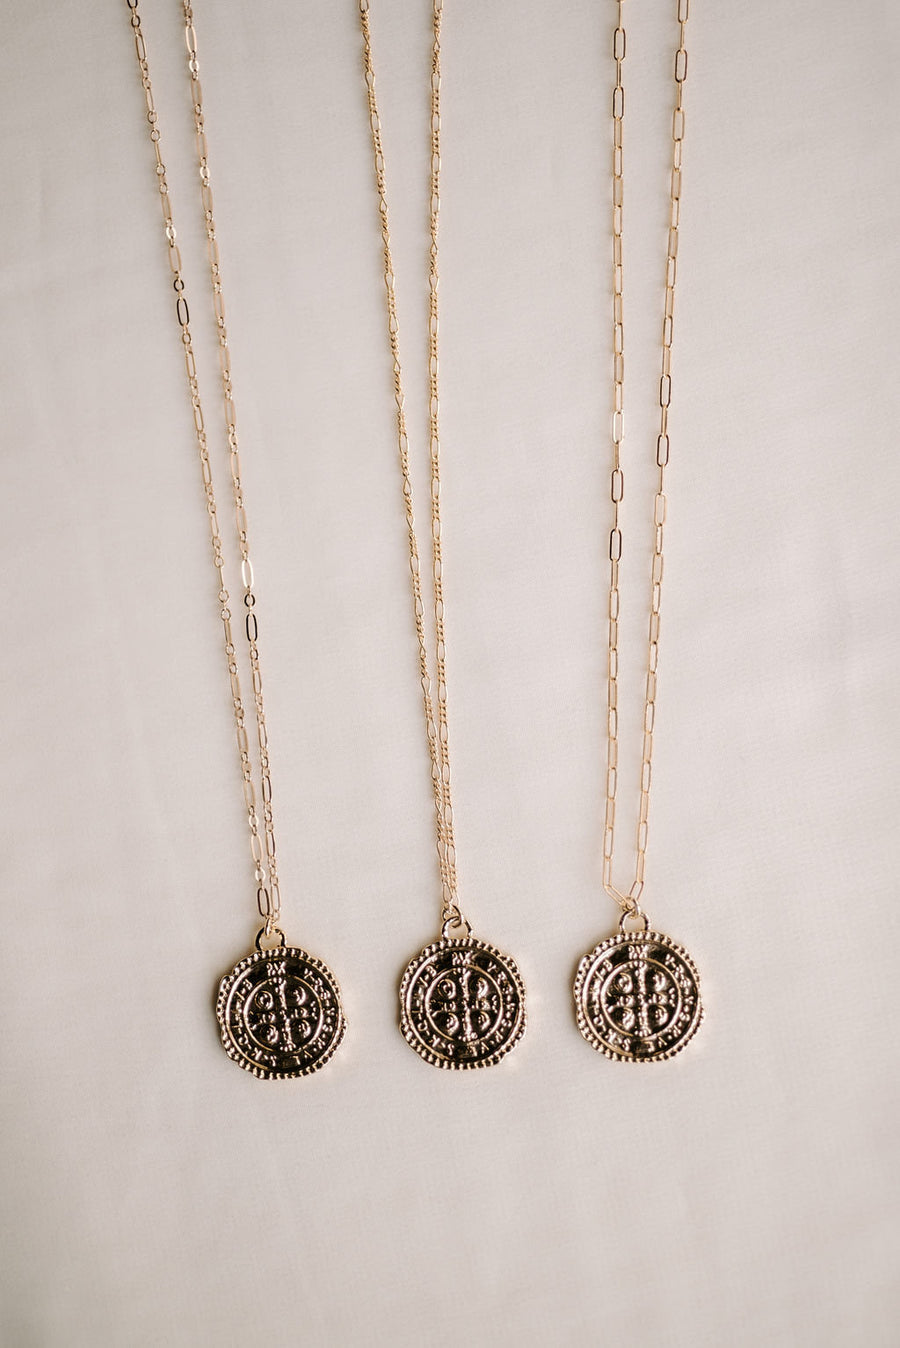 Cross Pendant, Cross Necklace, Handmade Jewelry, Coin Pendant, Personalized, Custom Jewelry, Gold Jewelry, Link Chain, Birthday Gift